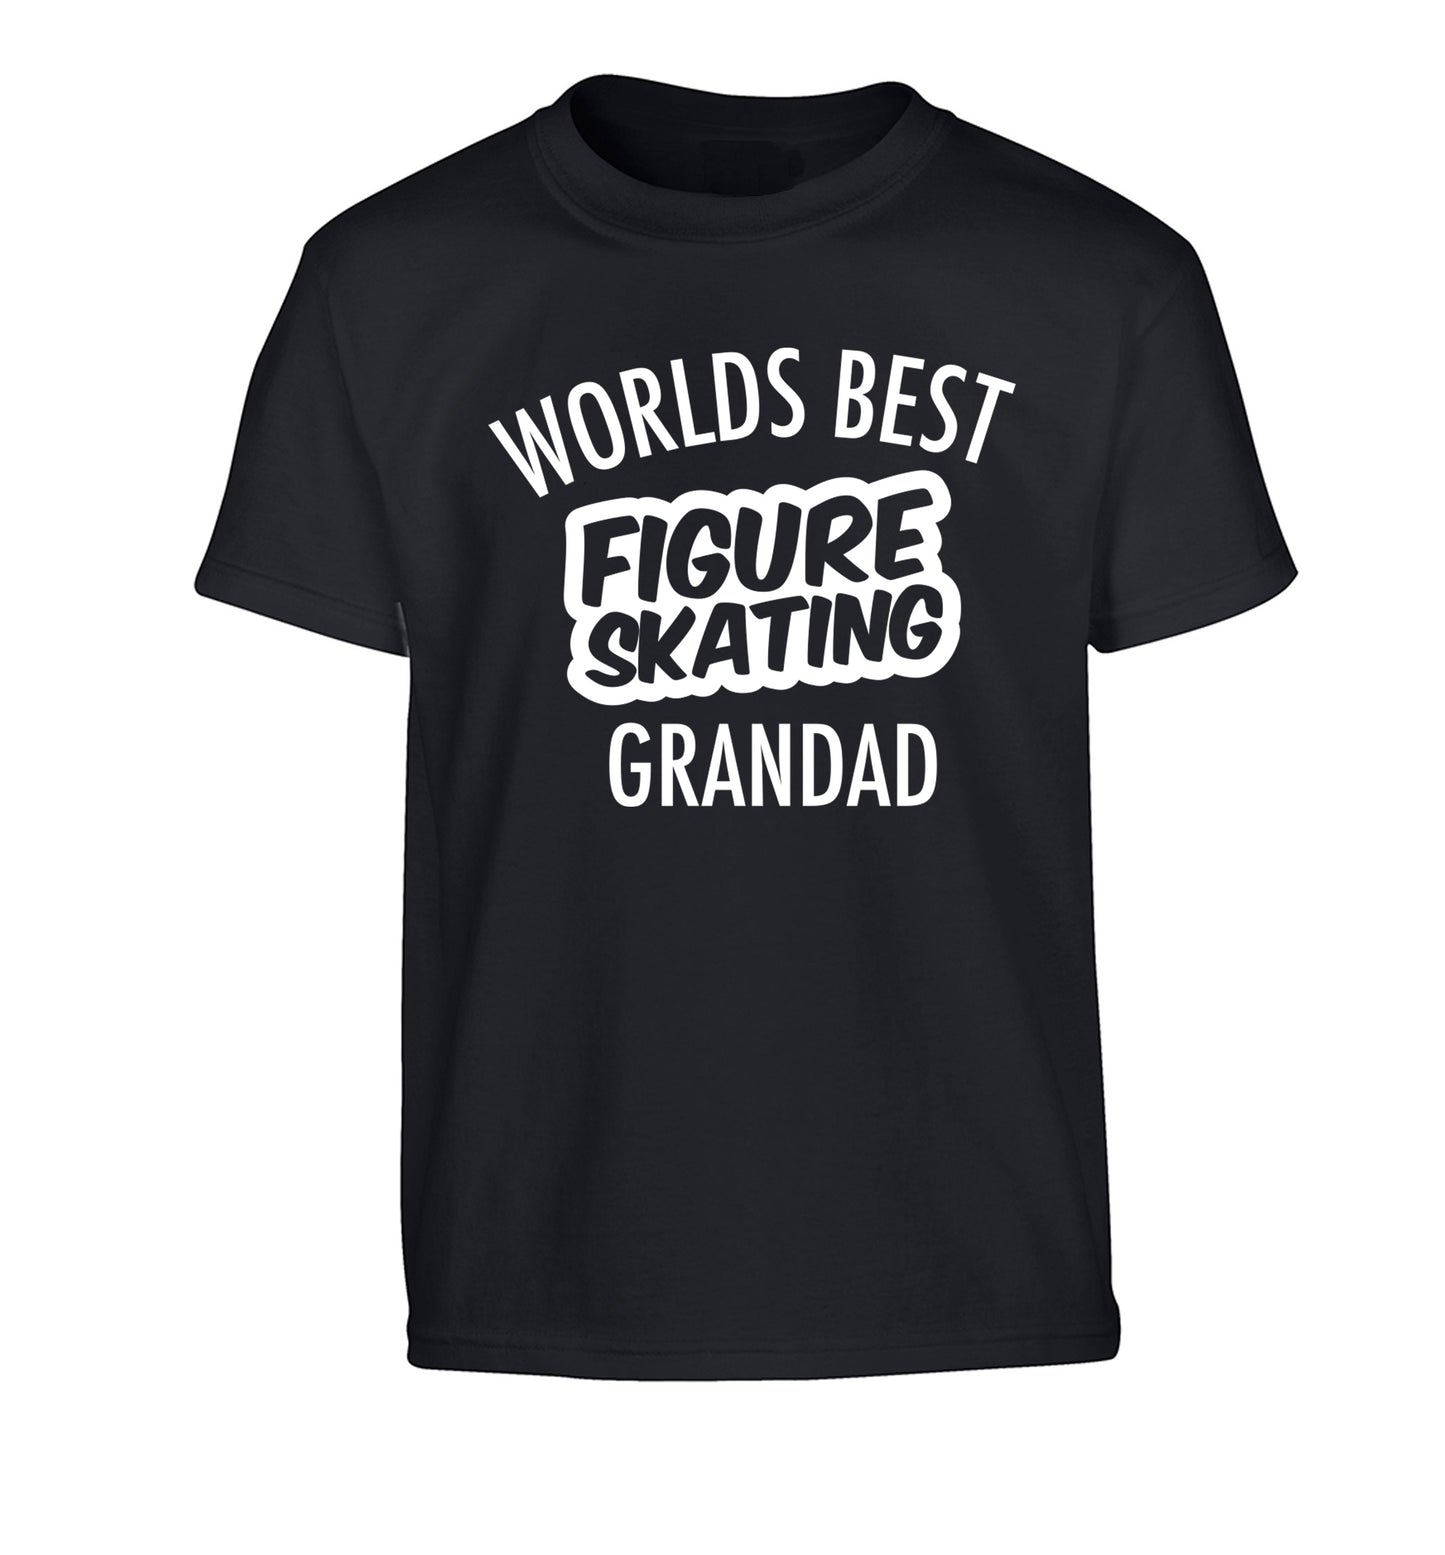 Worlds best figure skating grandad Children's black Tshirt 12-14 Years